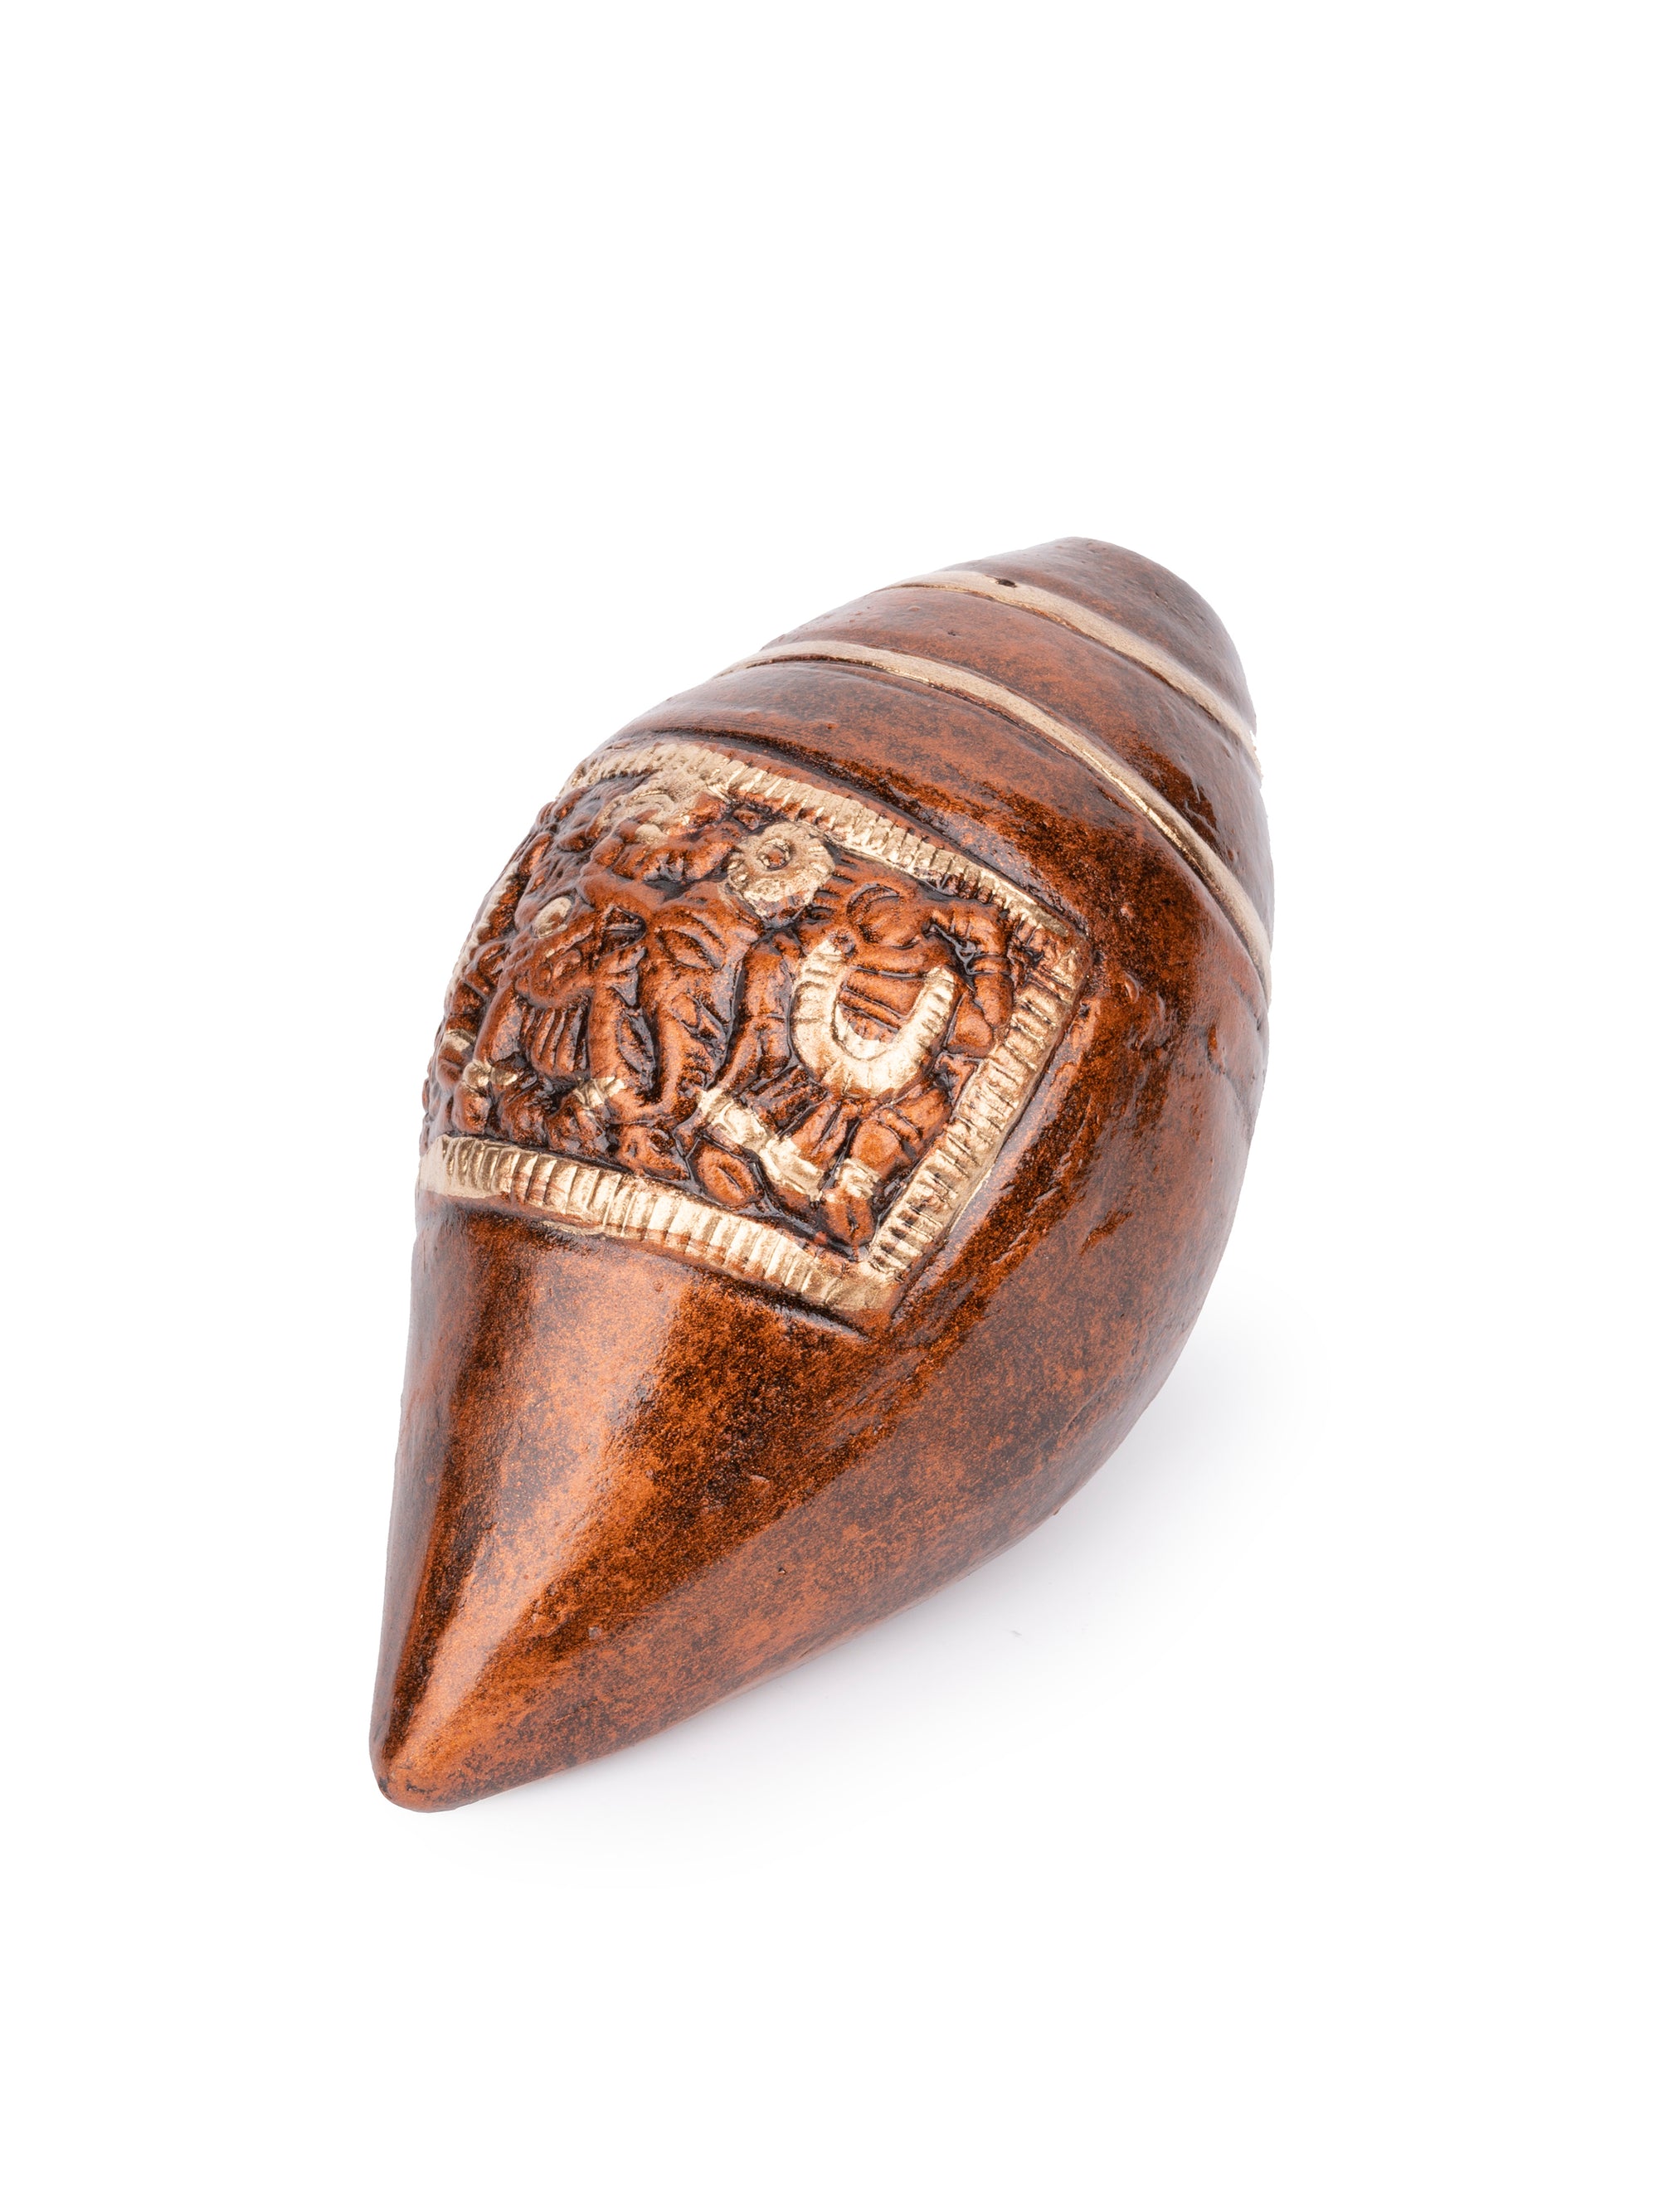 Handmade Terracotta Shankh Decorative showpiece - The Heritage Artifacts